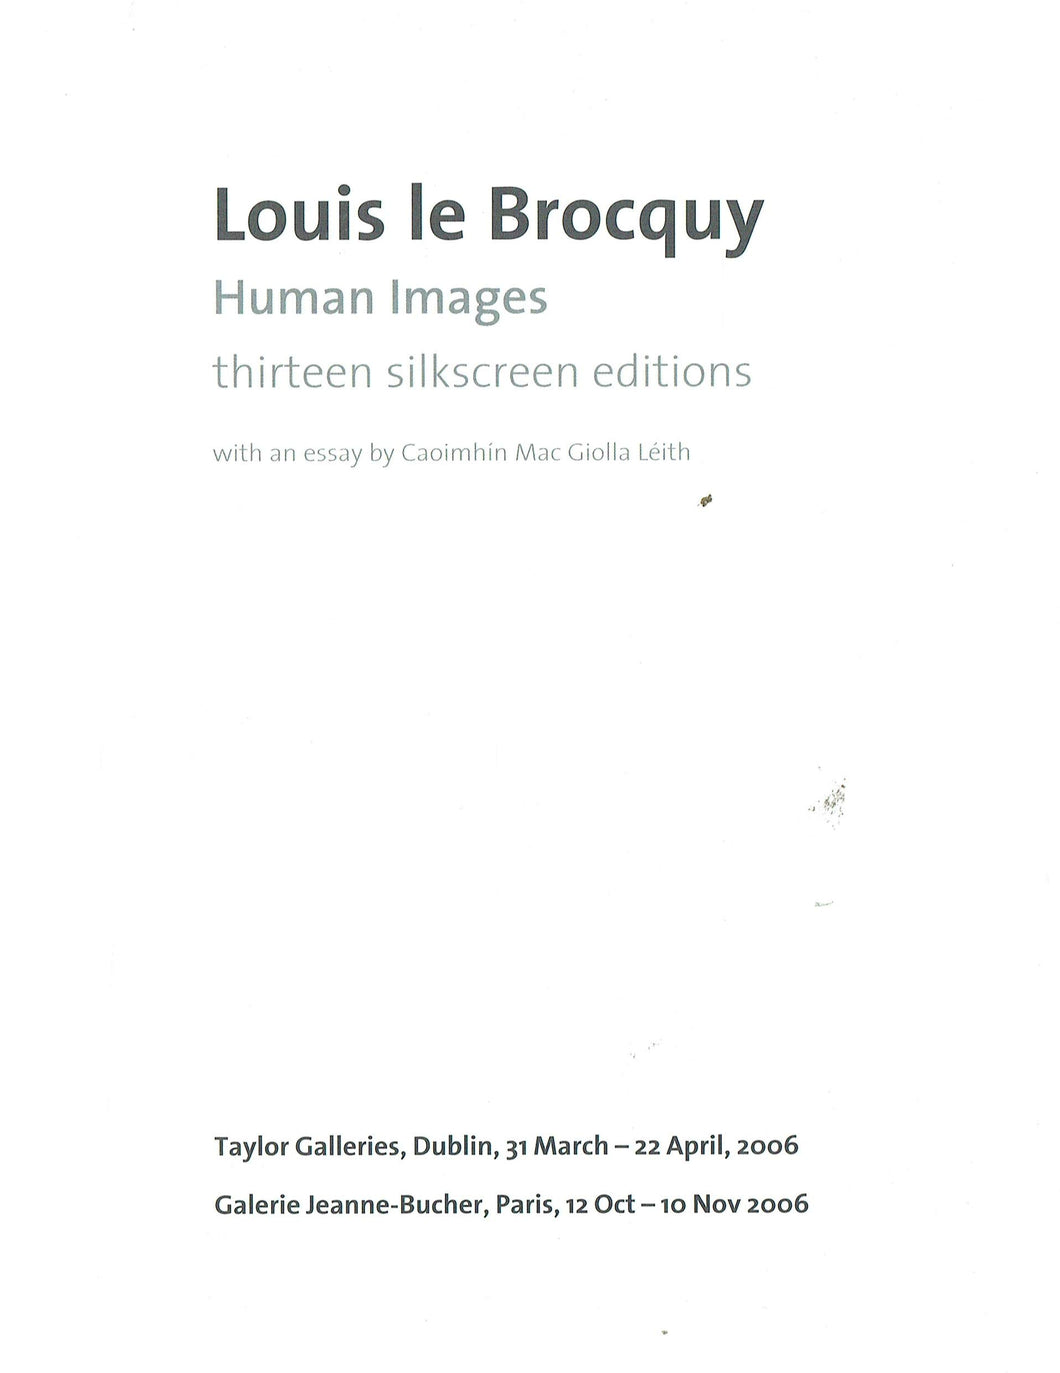 Louis le Brocquy: Human Images: thirteen silkscreen editions